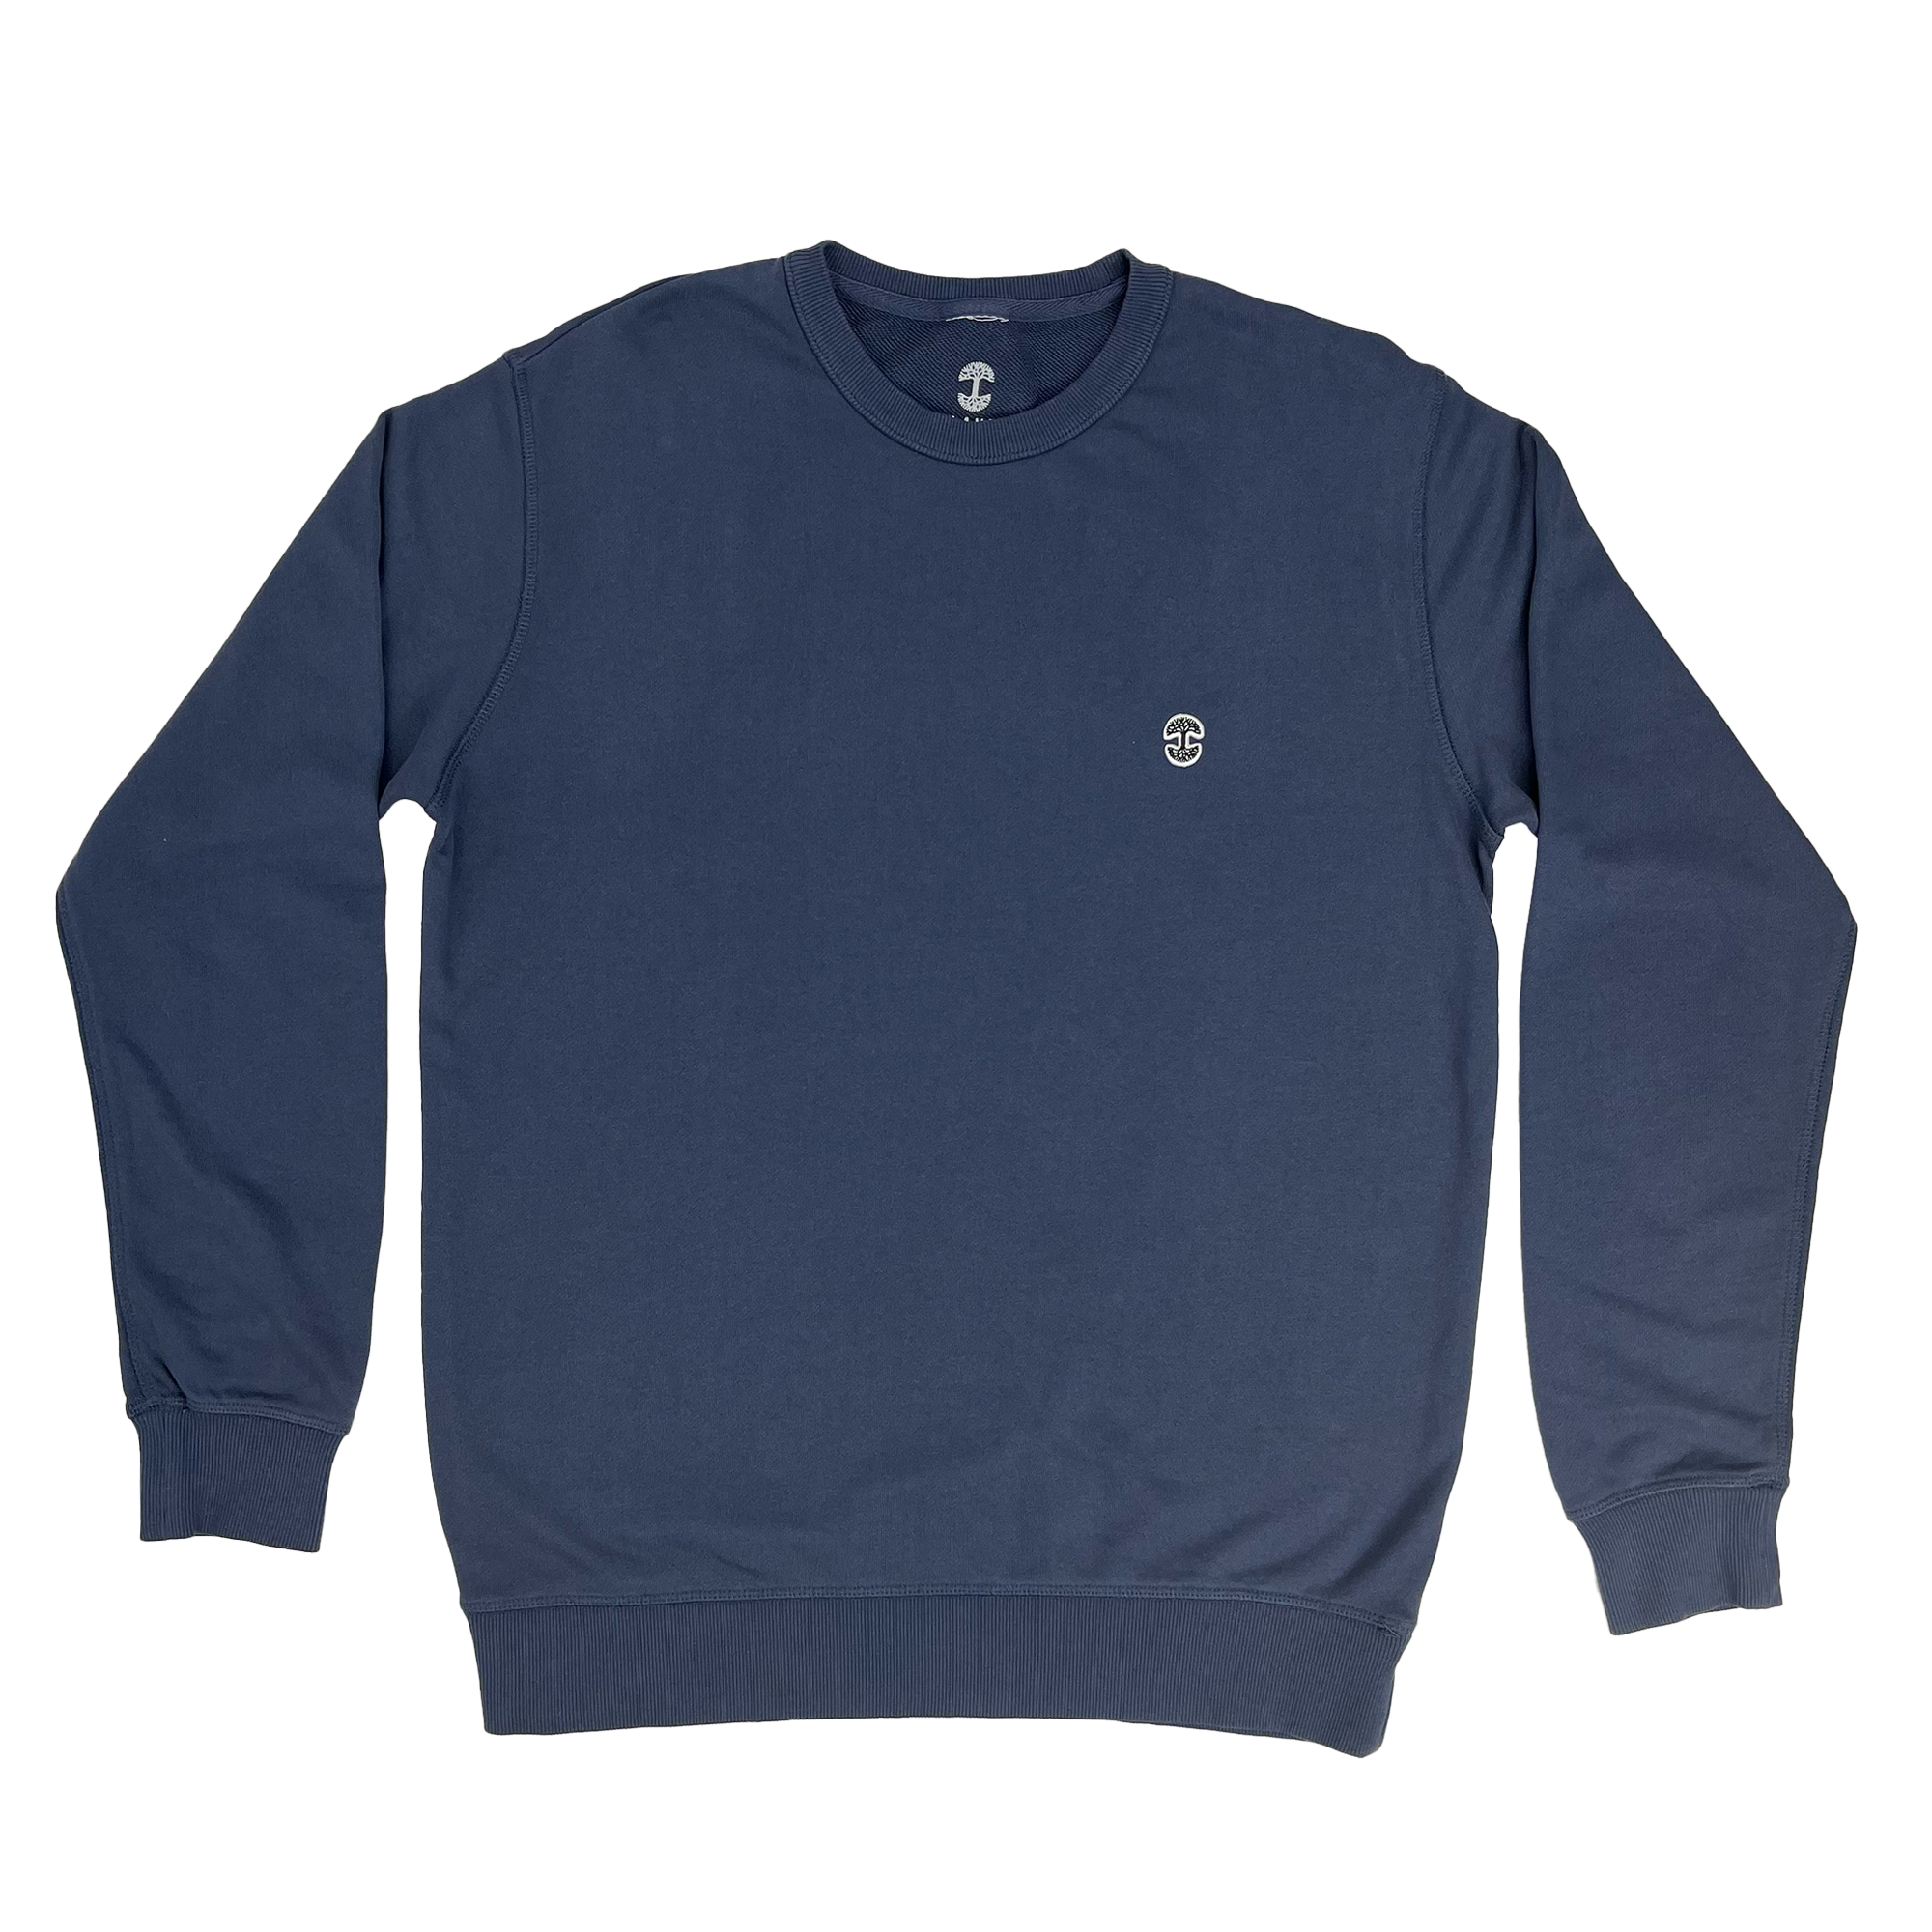 Front view of Premium crewneck sweatshirt - Oaklandish tree logo, Petrol Blue.